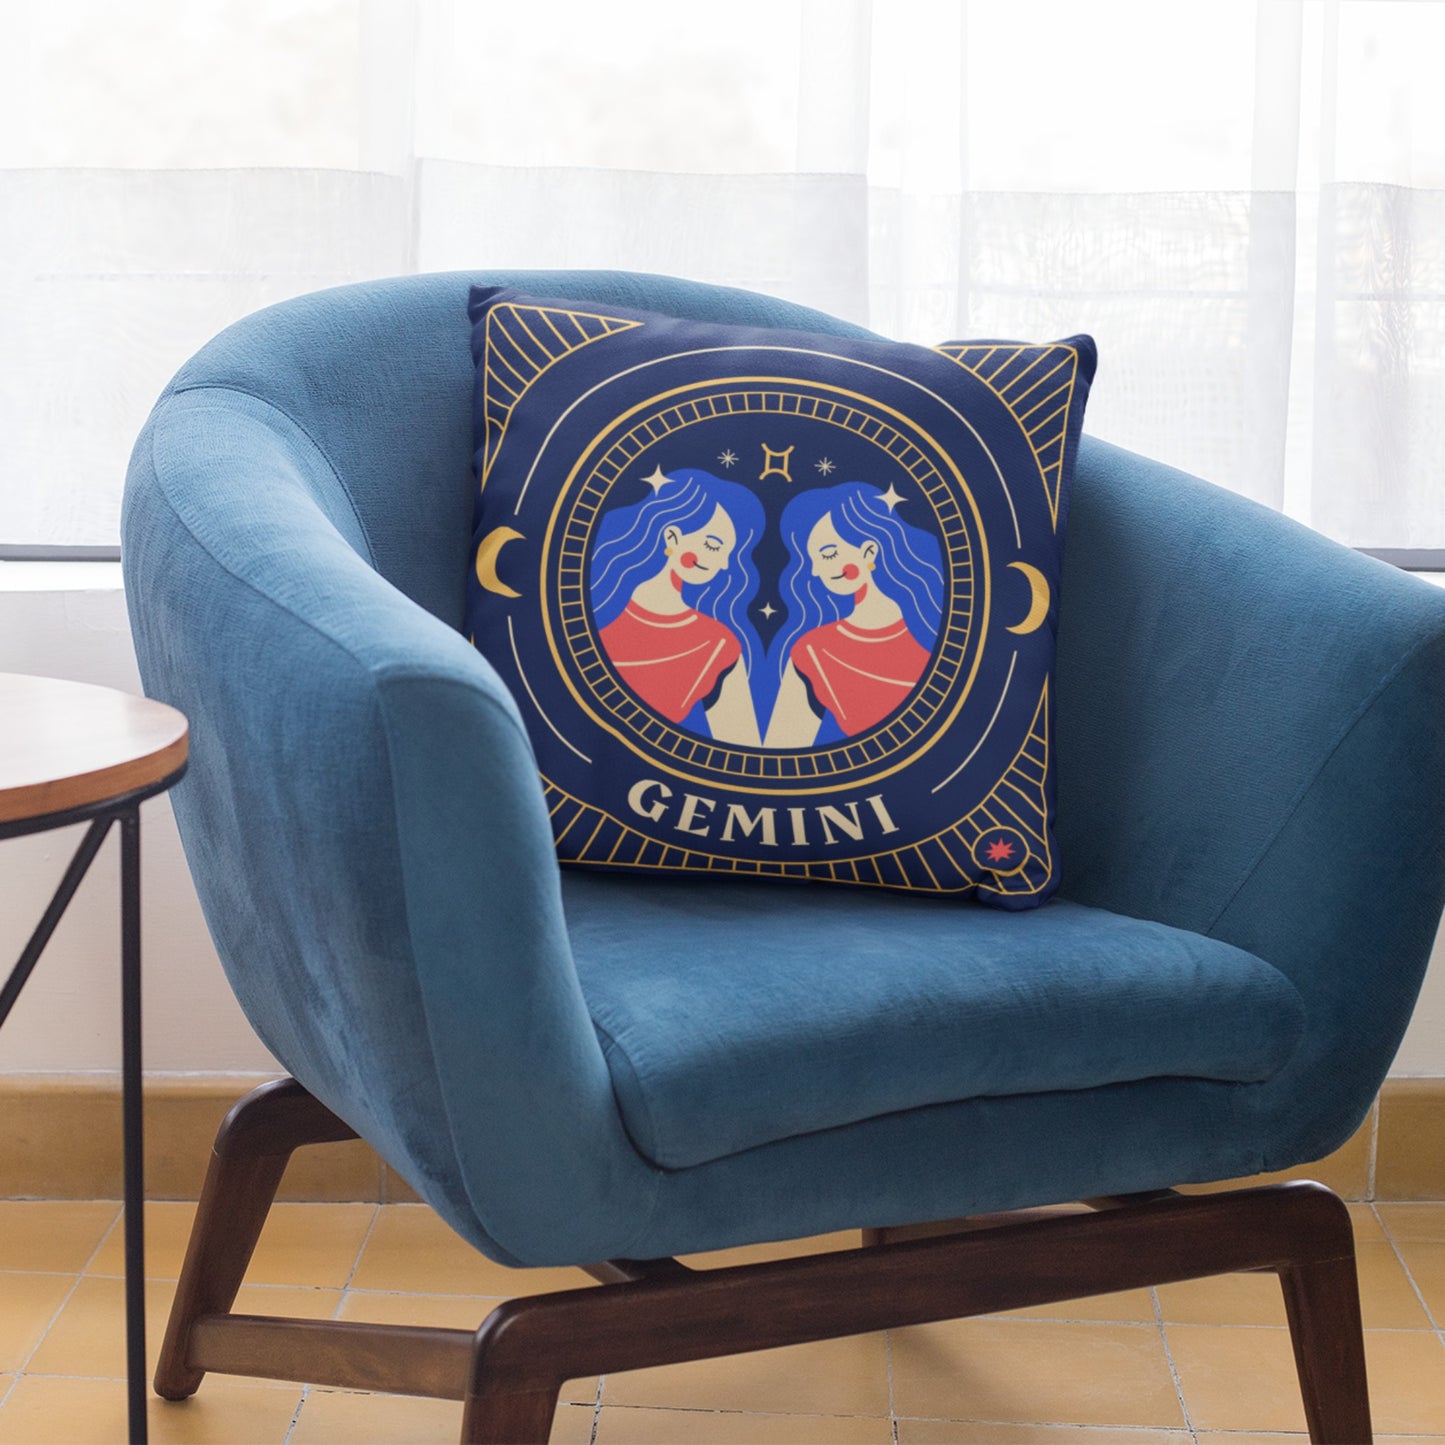 Homeezone's Gemini Astrology Theme Pillow